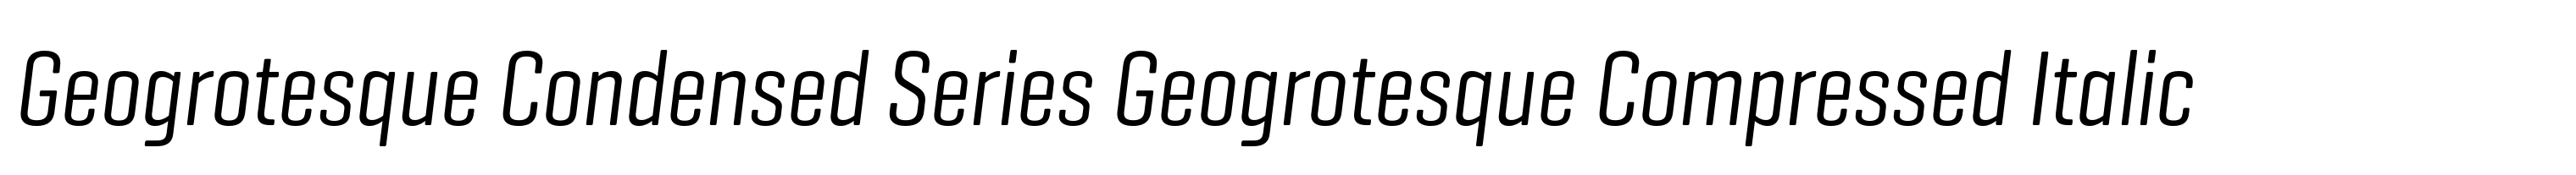 Geogrotesque Condensed Series Geogrotesque Compressed Italic